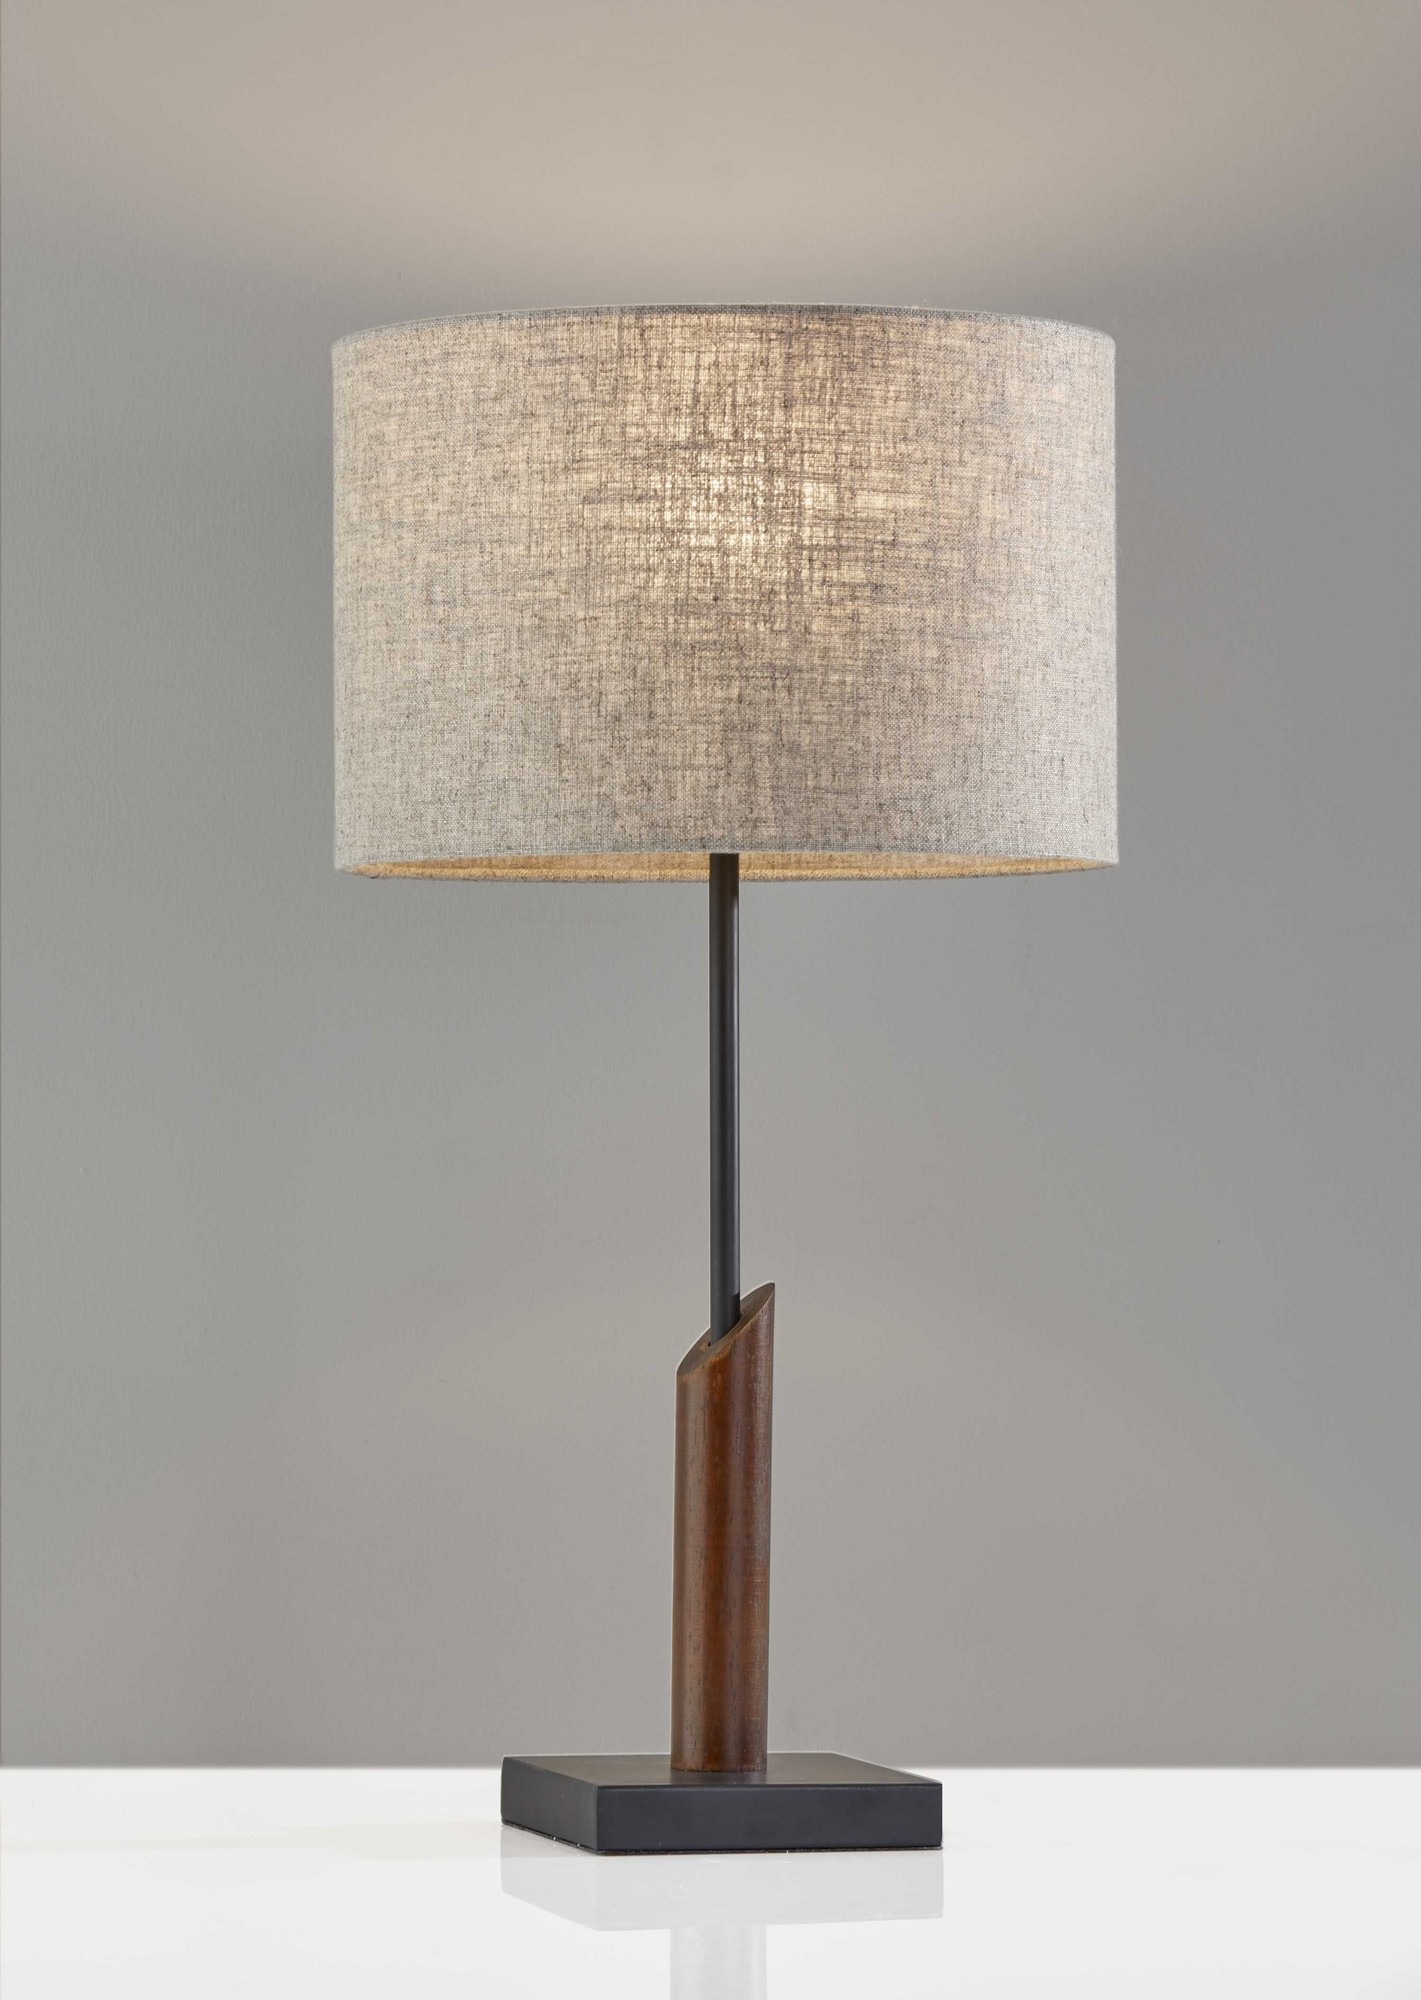 12" X 12" X 22.5" Black Wood Metal Table Lamp